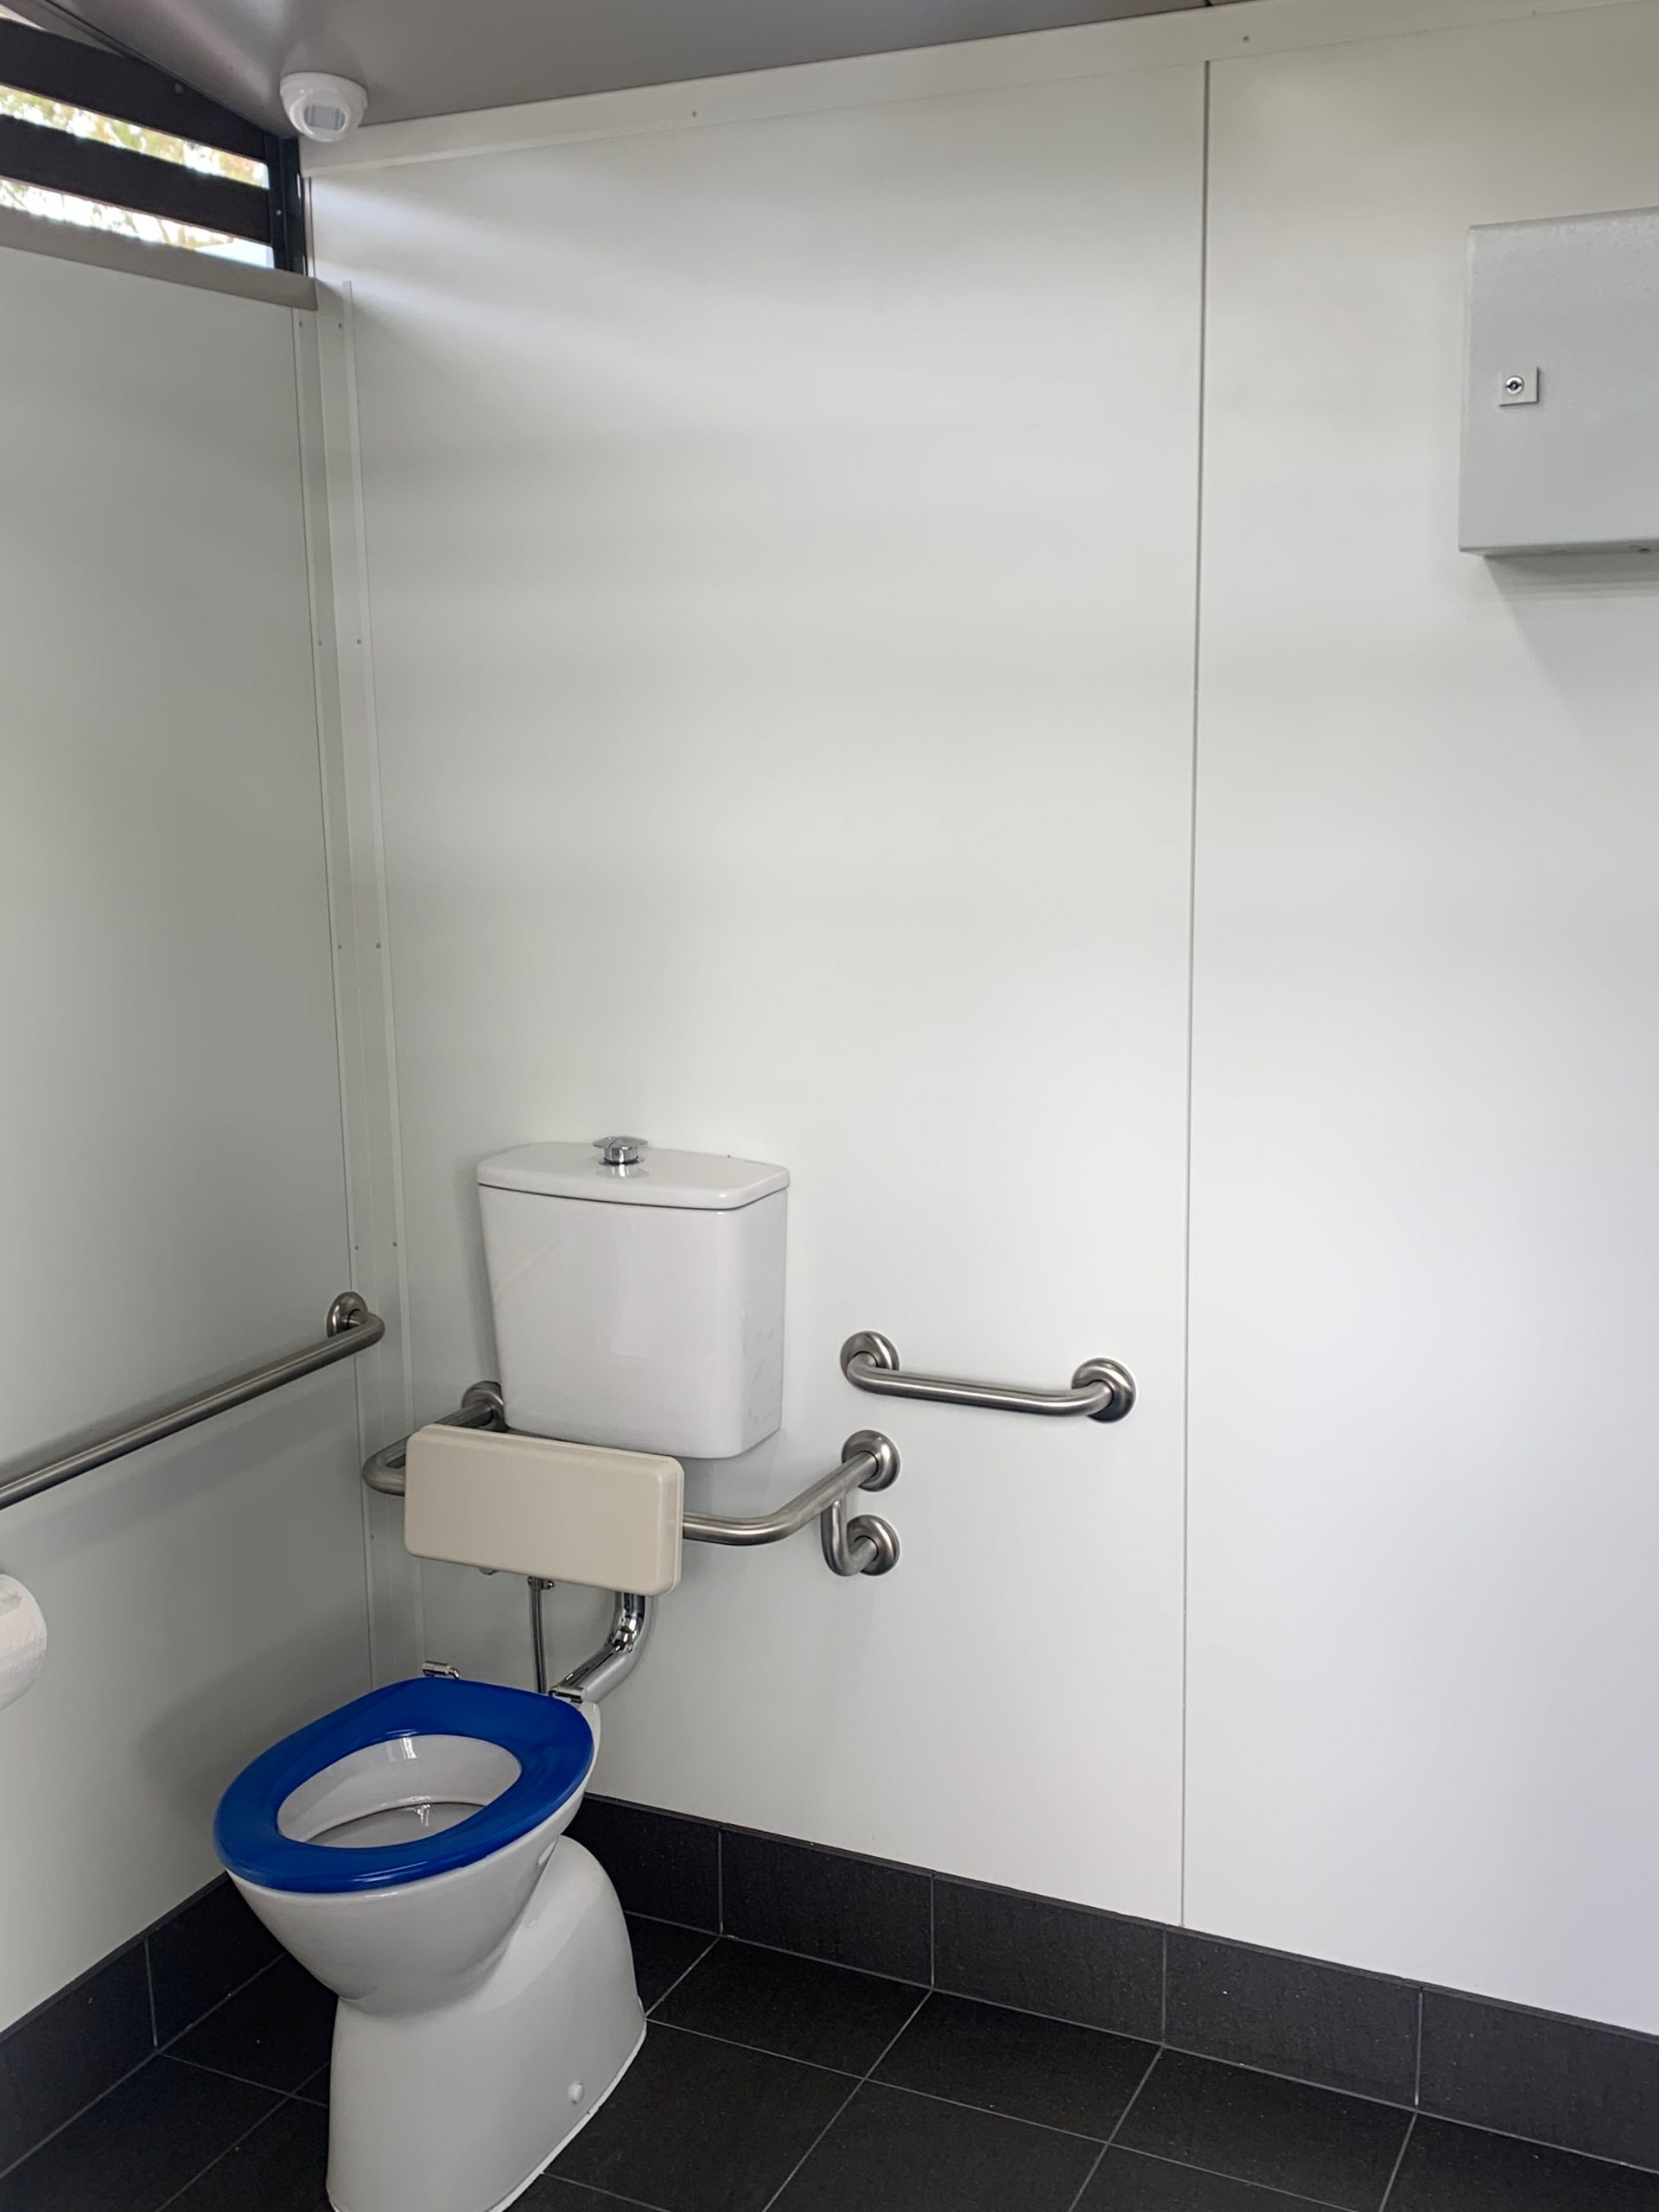 Commercial & Industrial bathrooms plumbing by Northway Plumbing in Adelaide